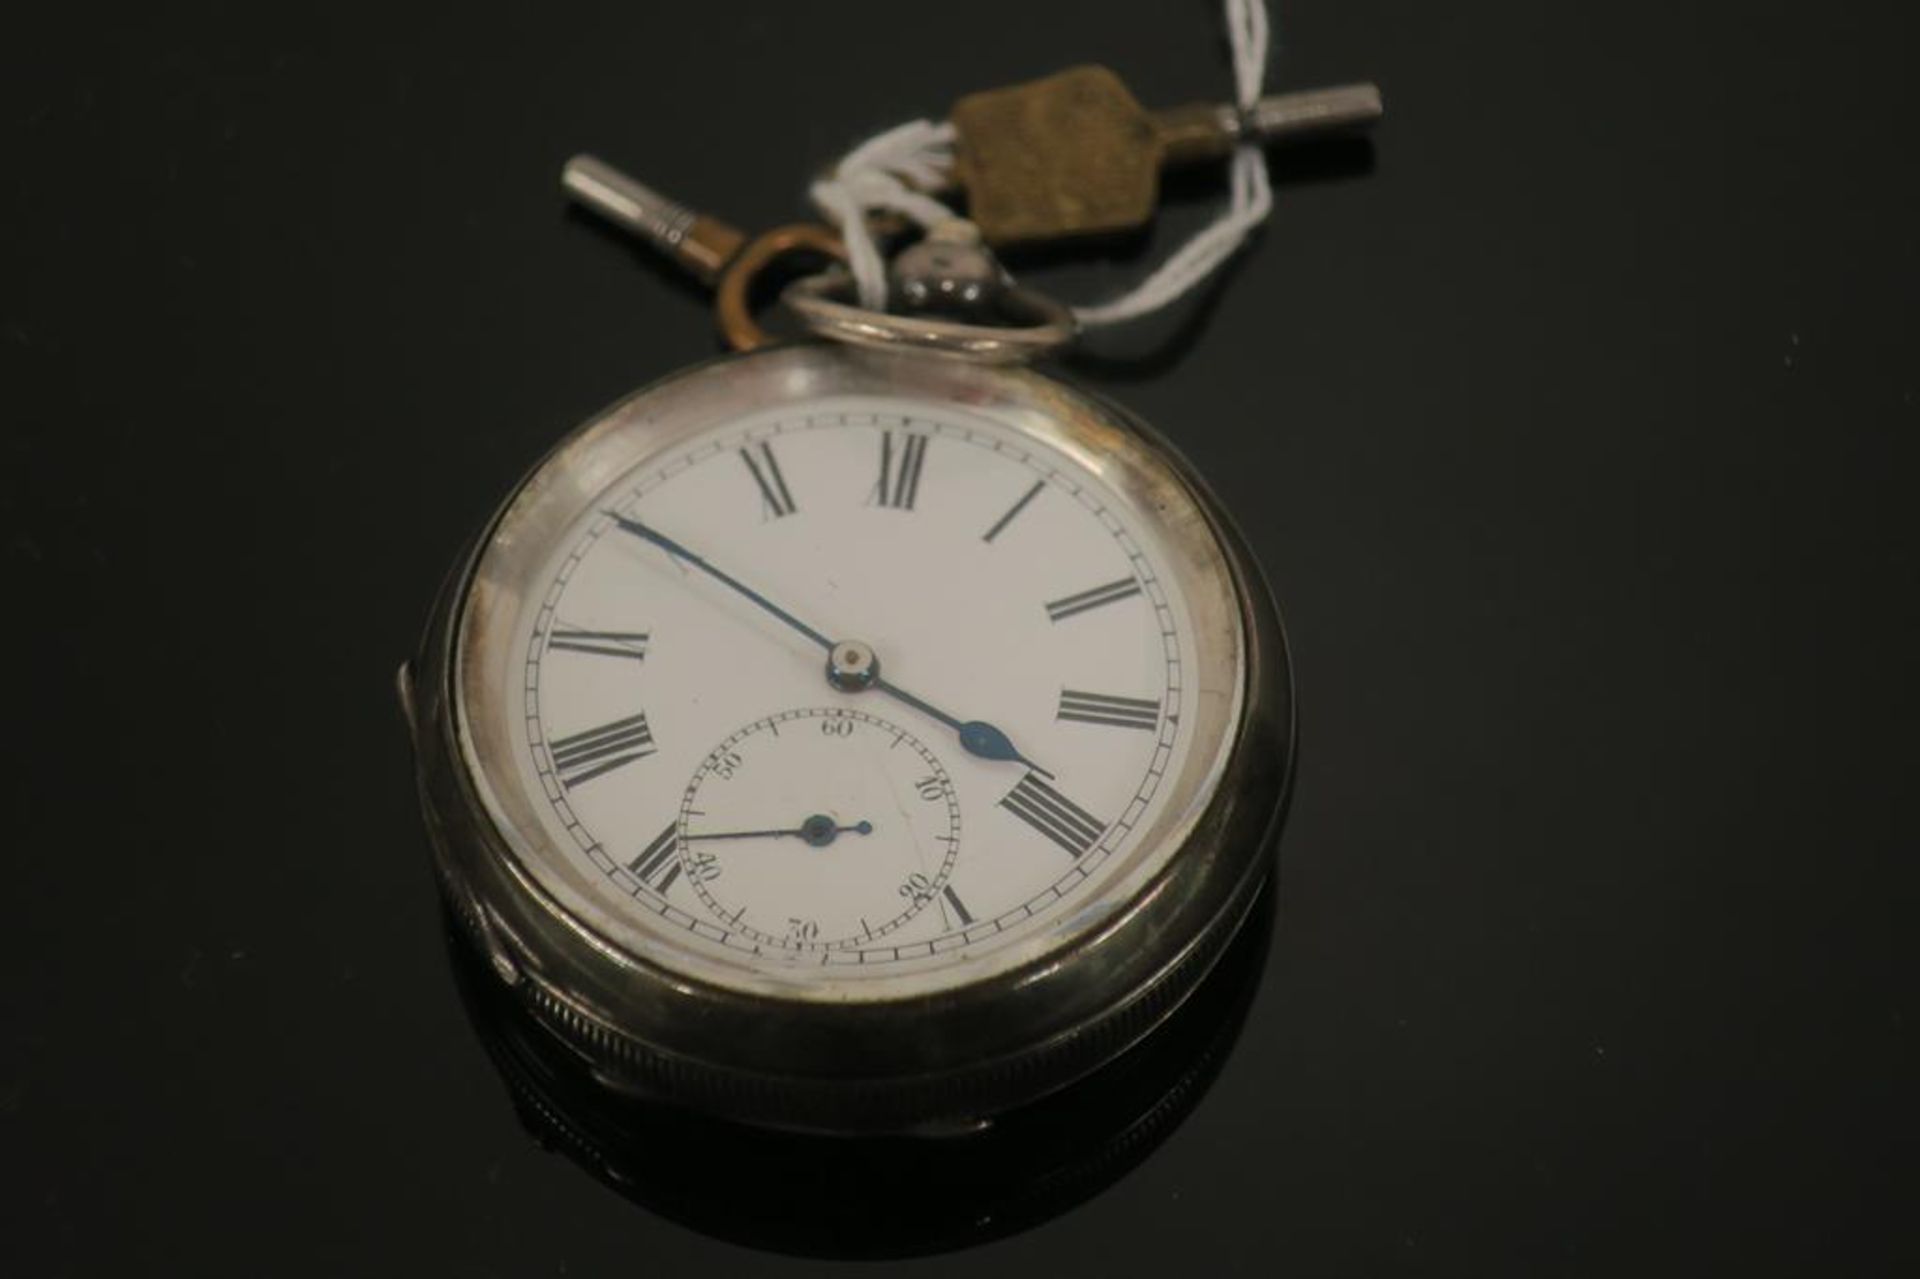 A Silver Pocket Watch with Winding Keys (est £25-£50)